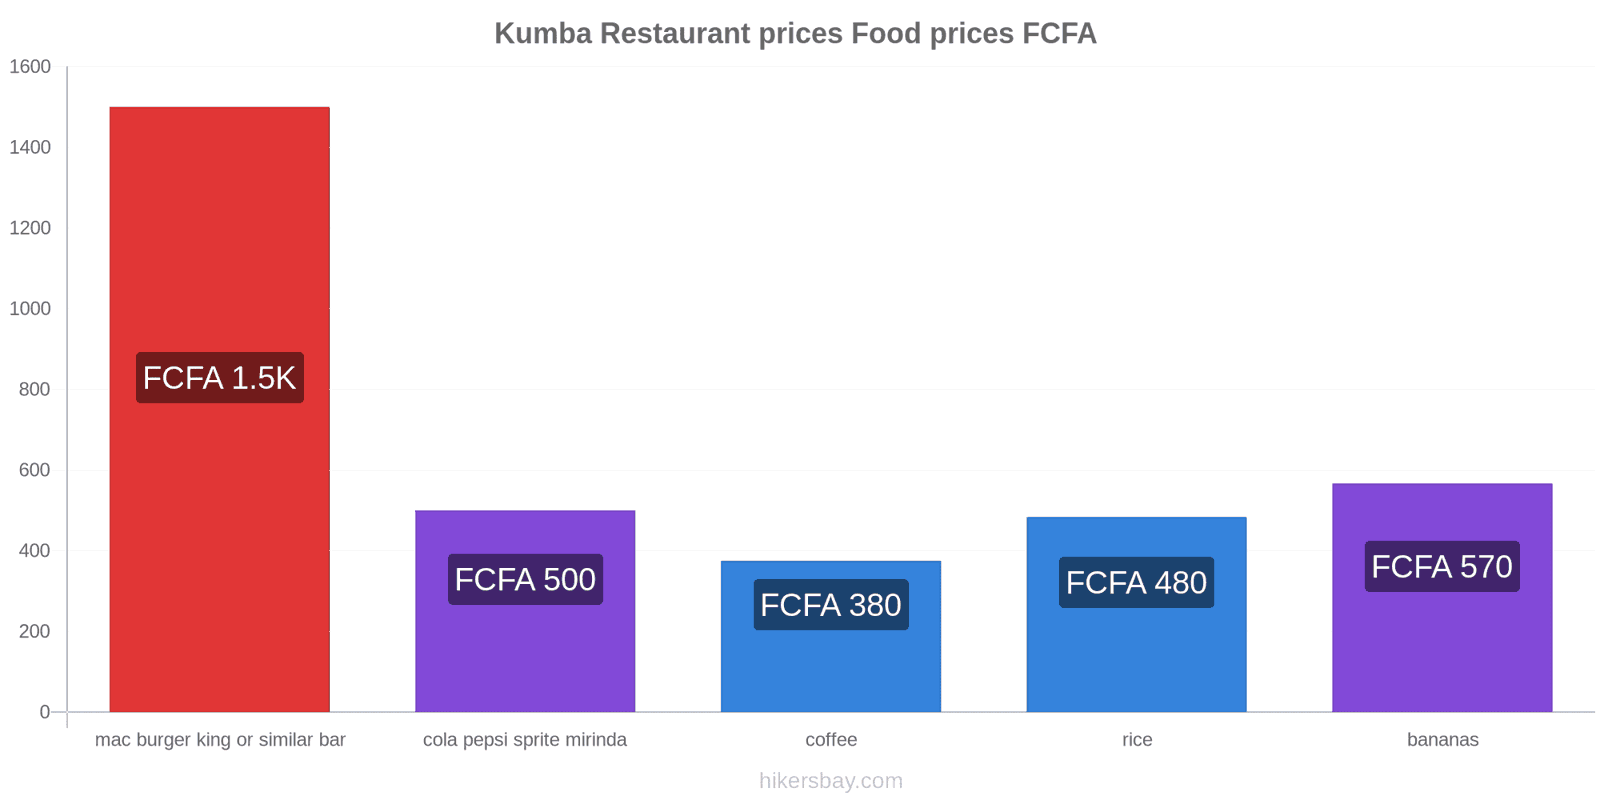 Kumba price changes hikersbay.com